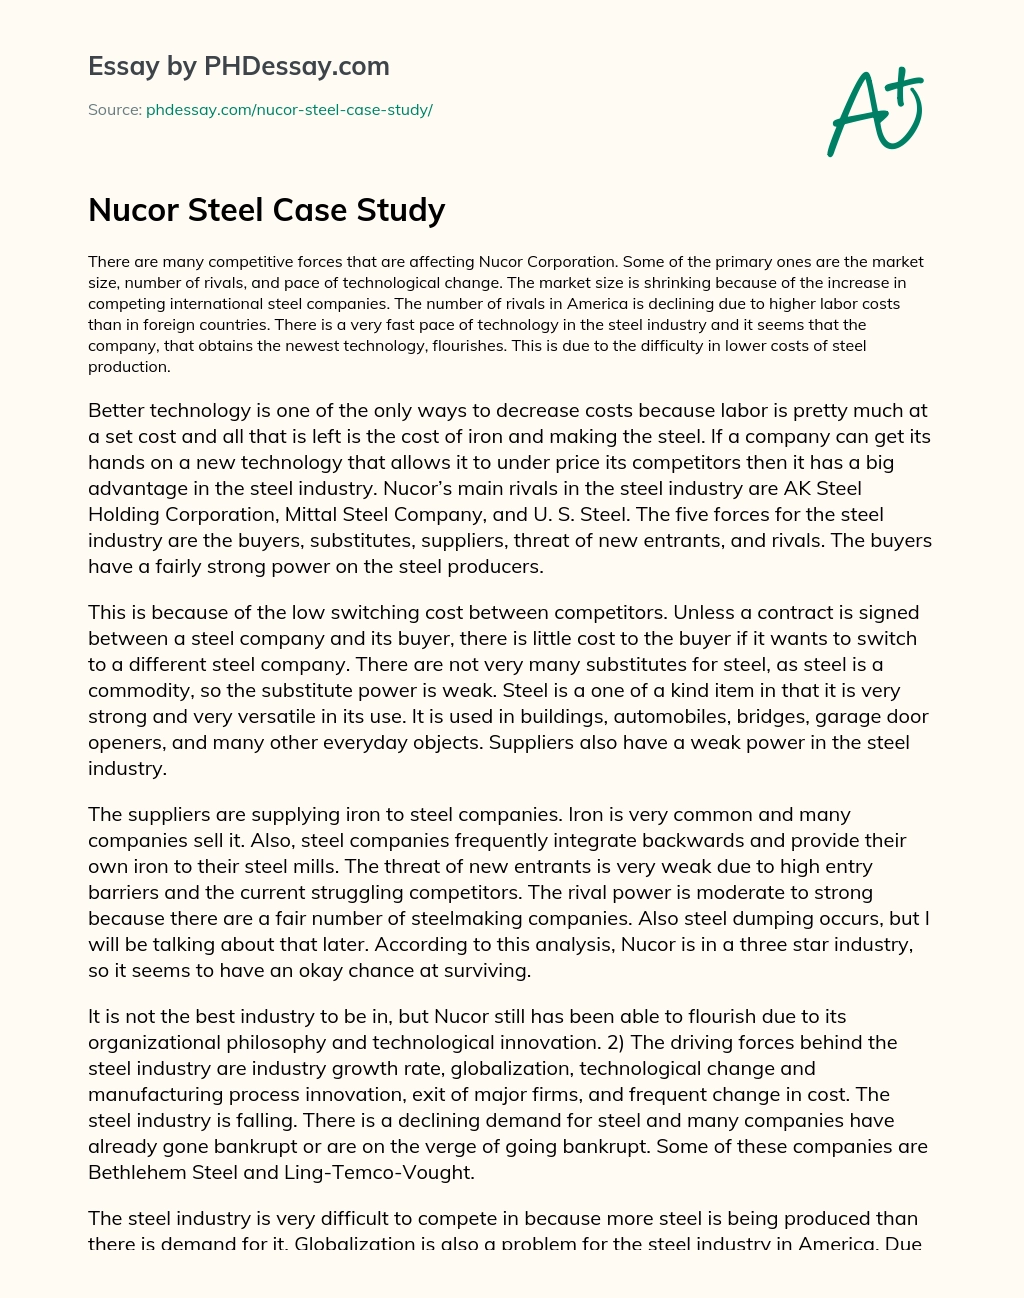 Nucor Steel Case Study essay